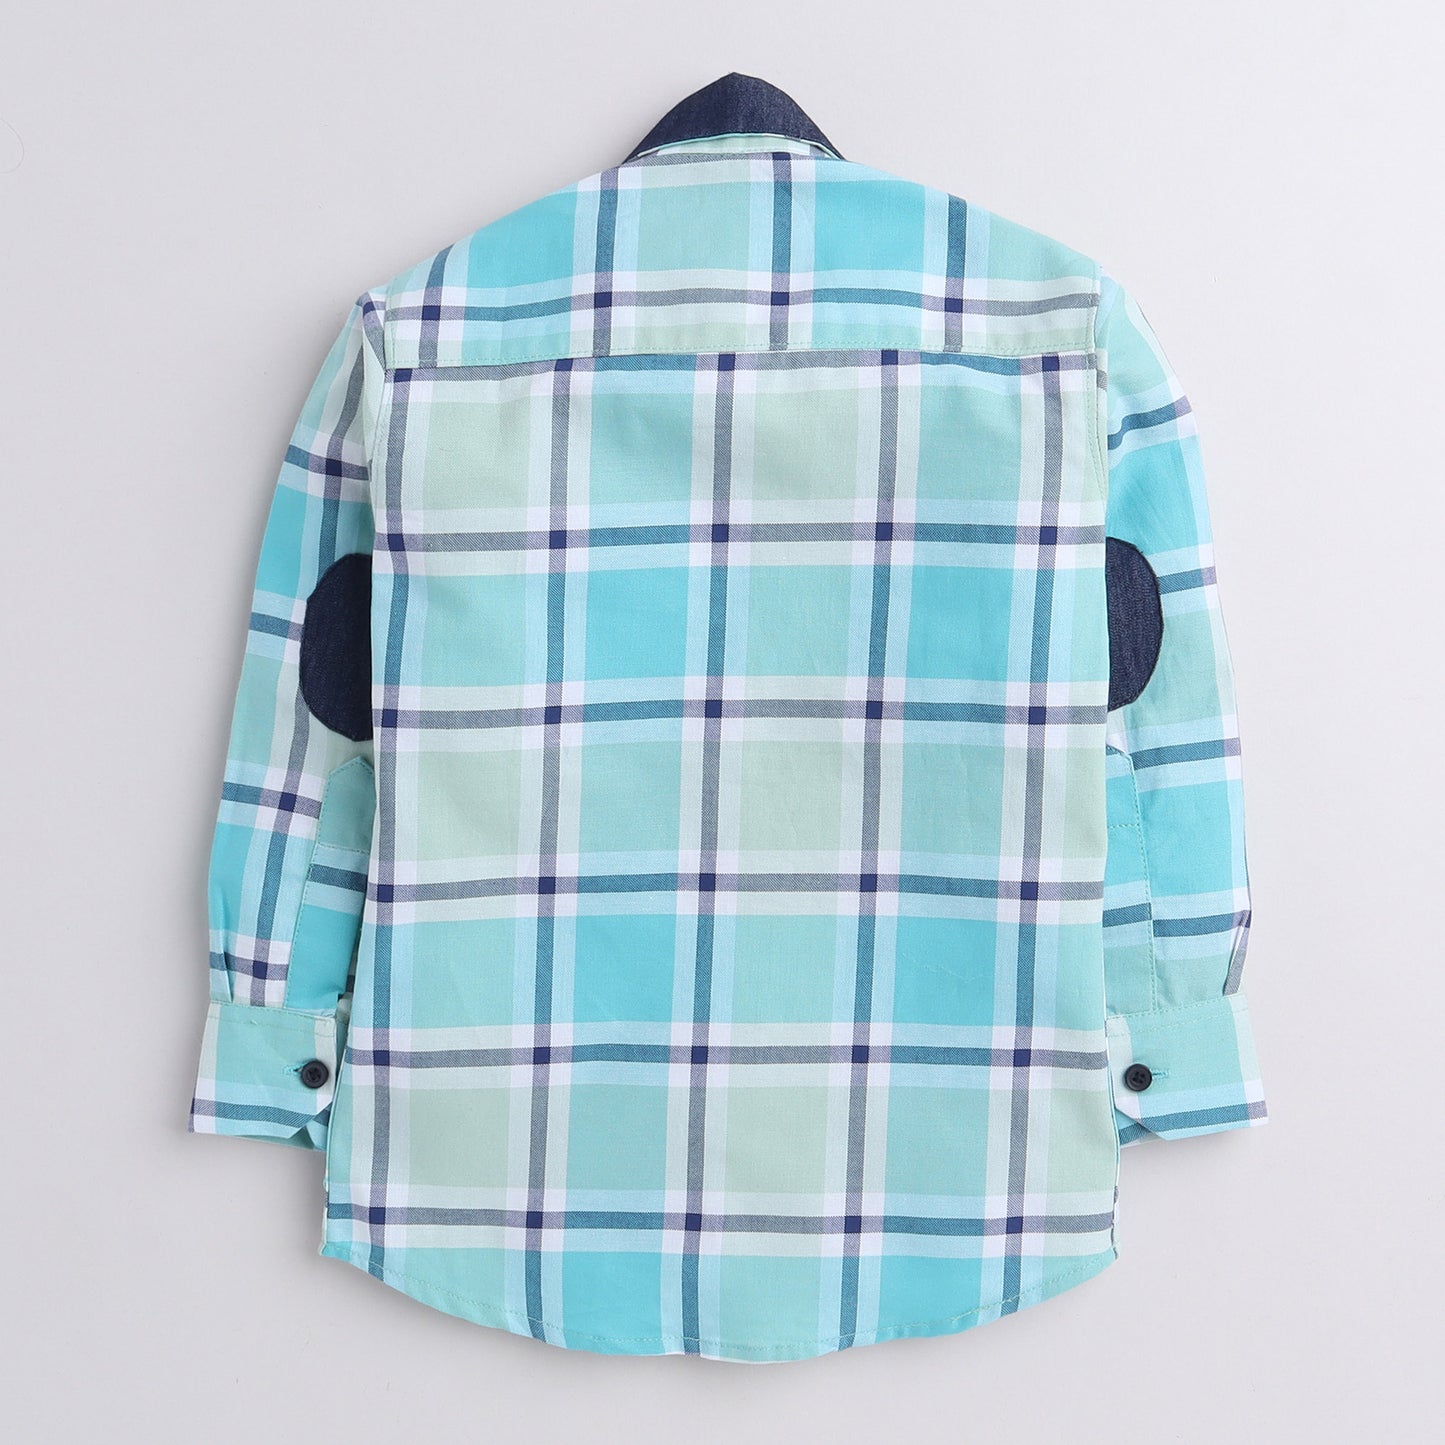 Polka Tots full sleeves checks shirt with  denim collar denim elbow patch  - Blue